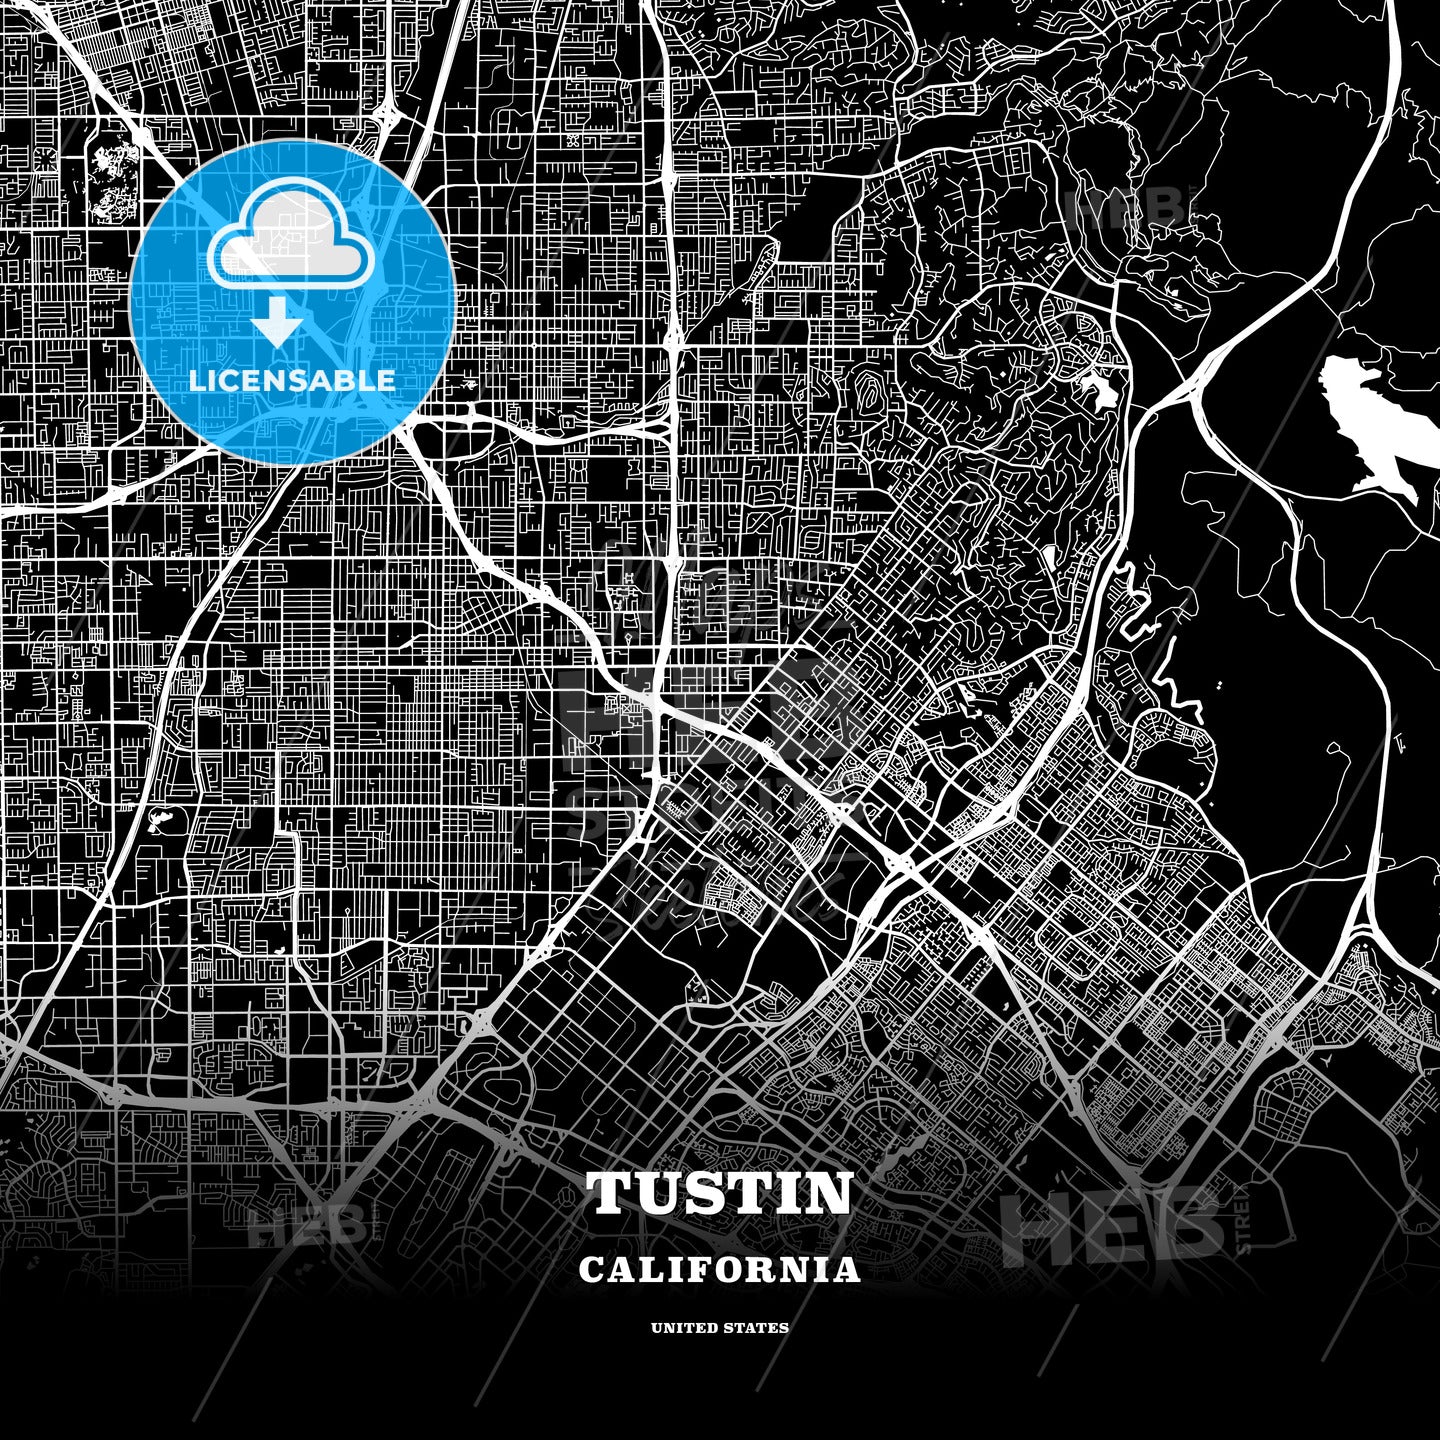 Tustin, California, USA map